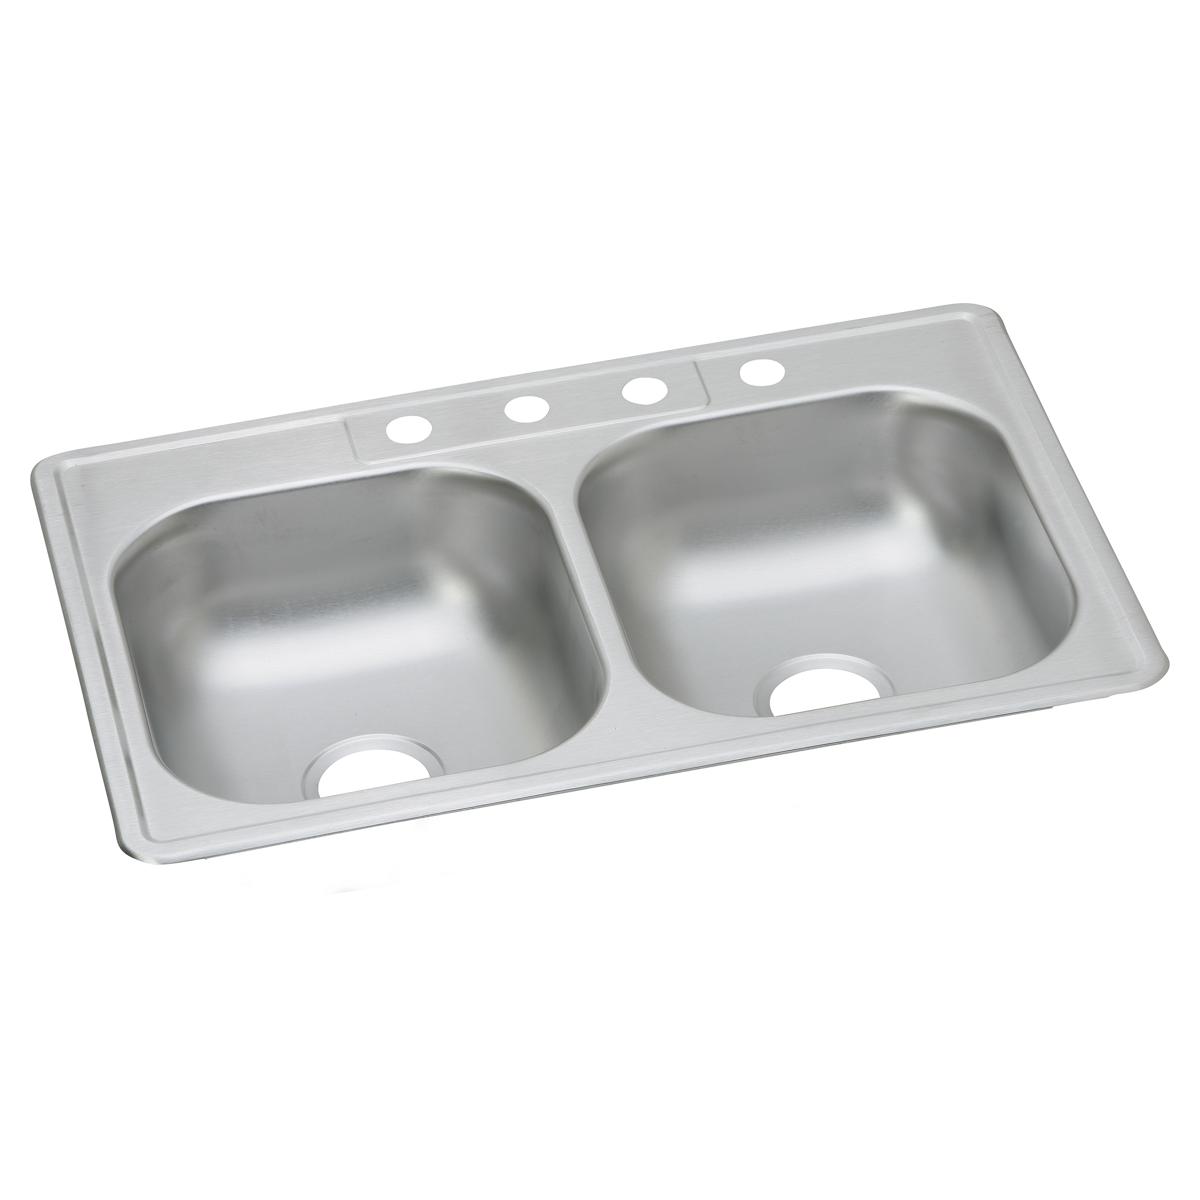 Elkay Stainless Steel Double Bowl Drop-in Sink 1125